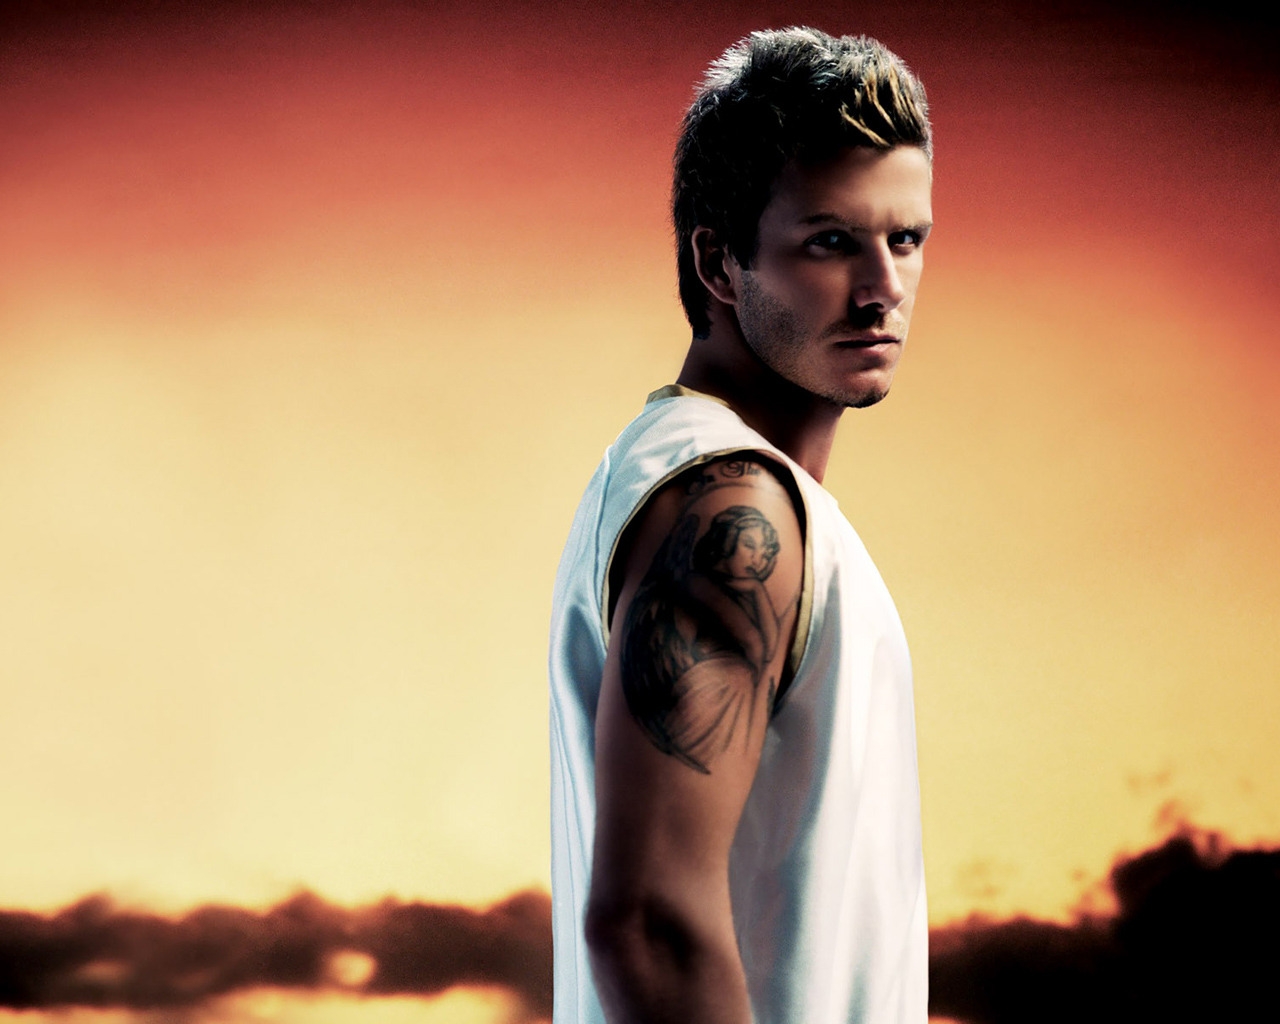 David Beckham Cool for 1280 x 1024 resolution